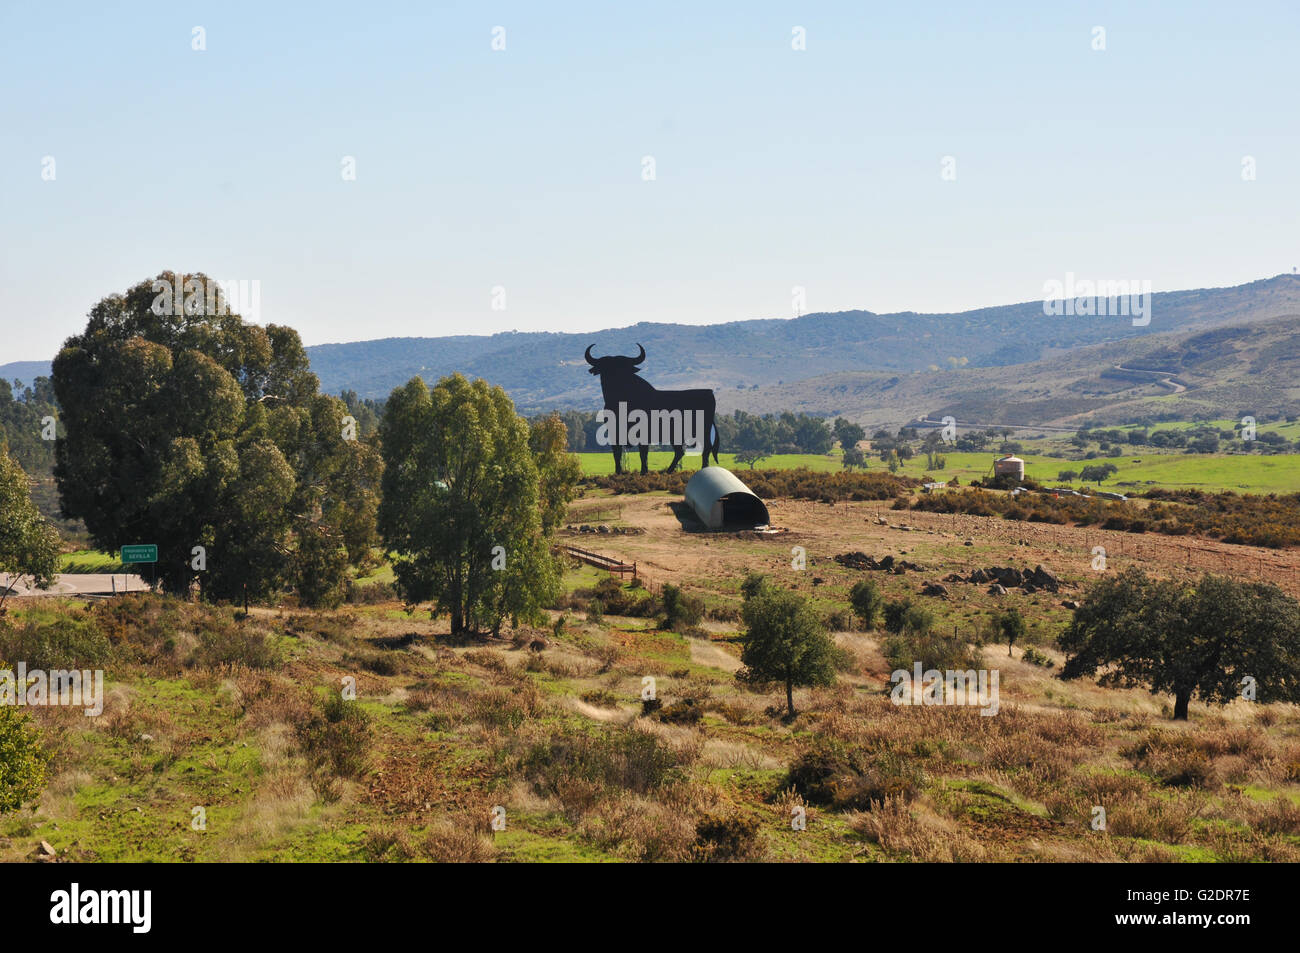 Bull Werbung Bild am Straßenrand in Andalusien. Stockfoto